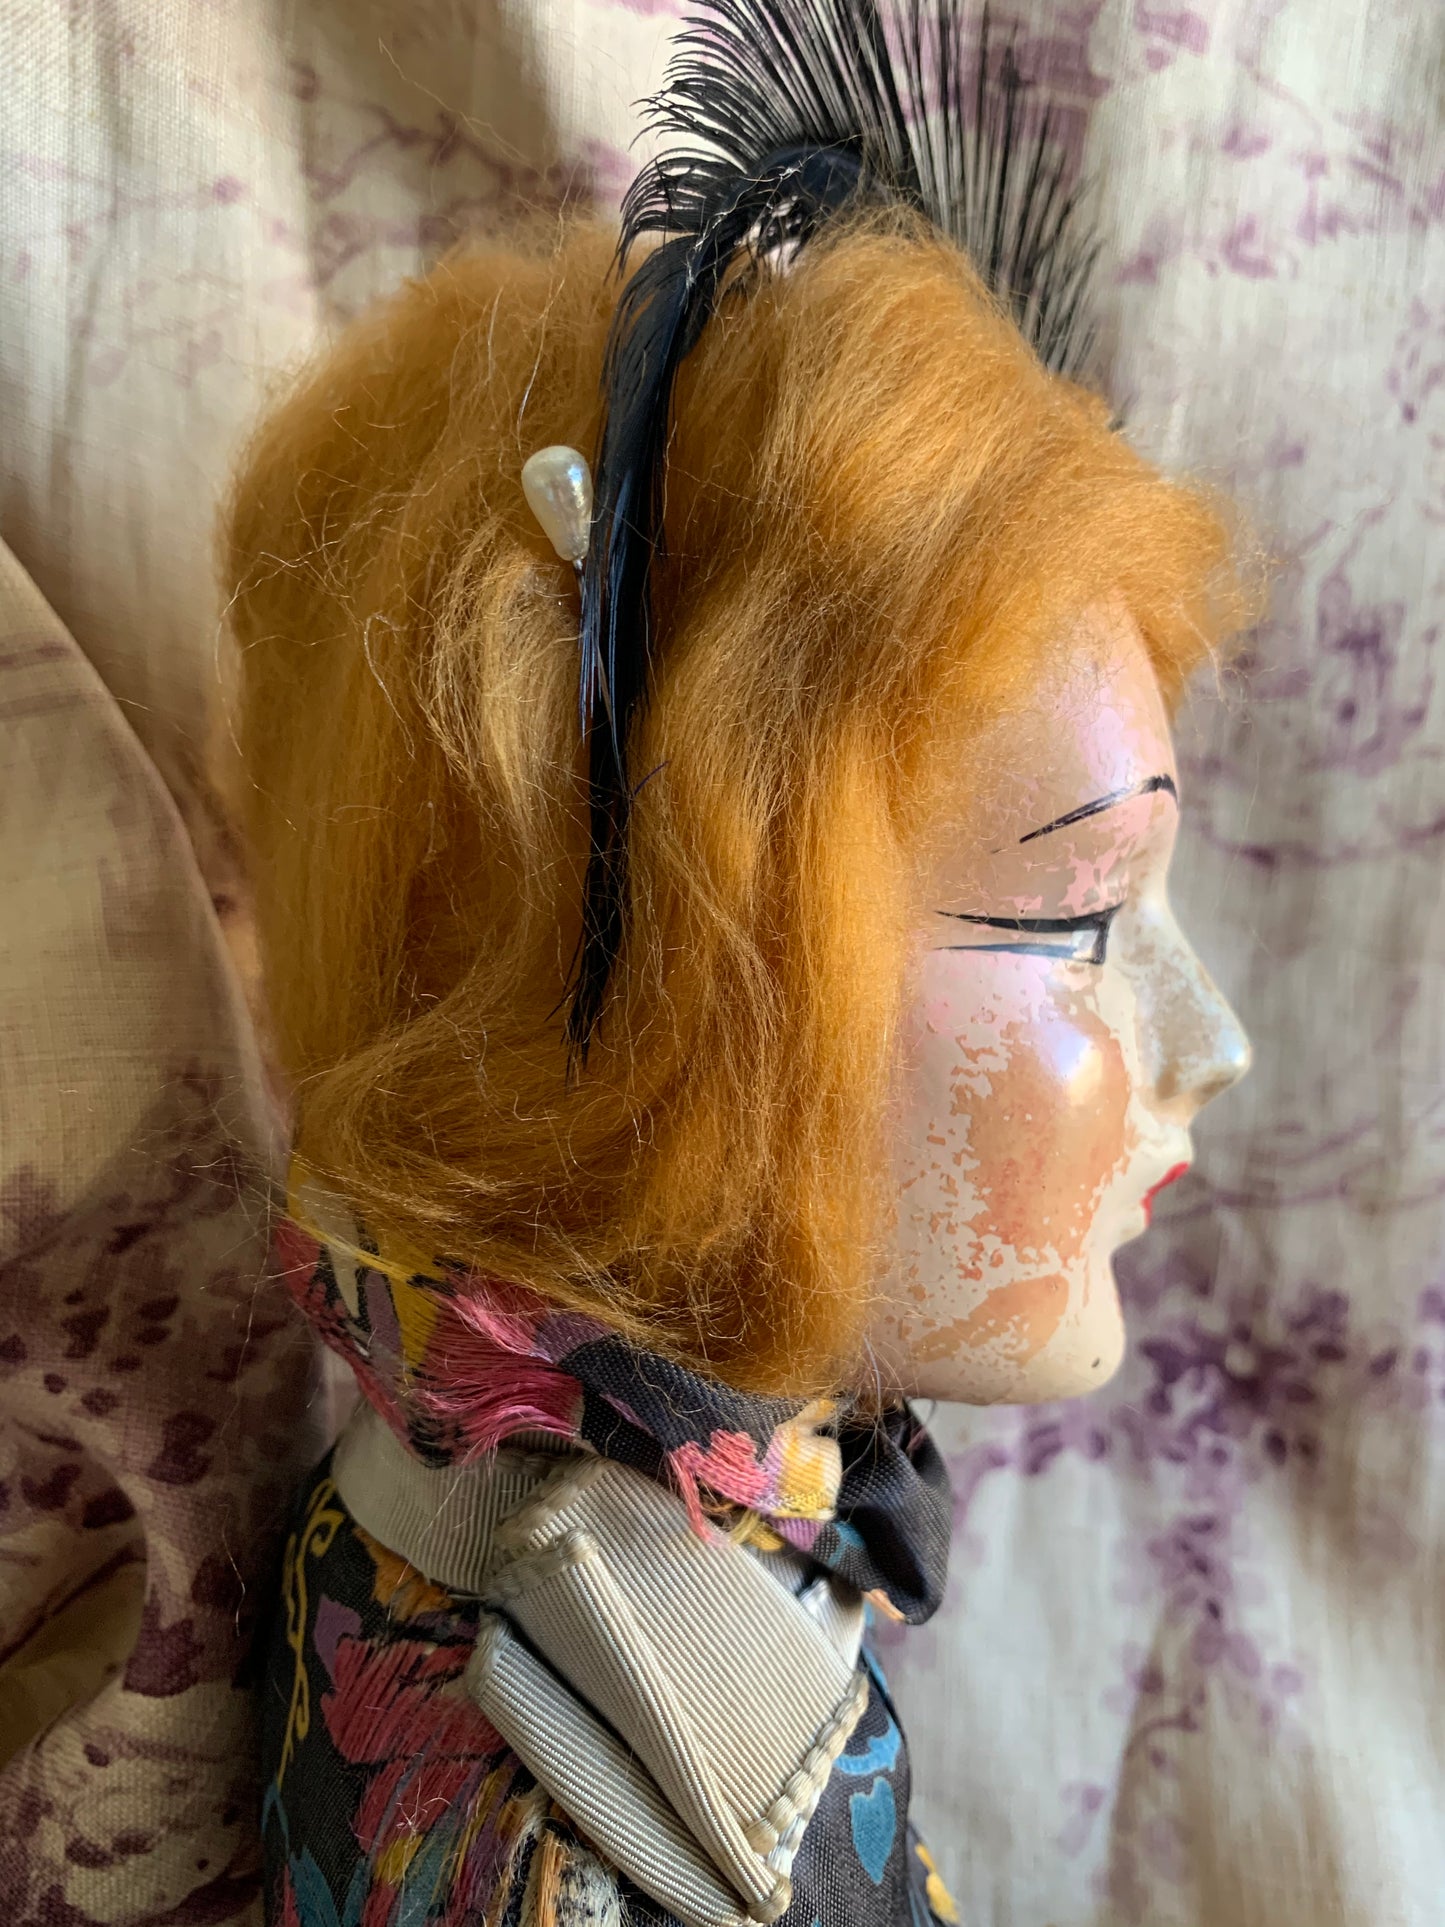 Vintage boudoir doll floral cloth body